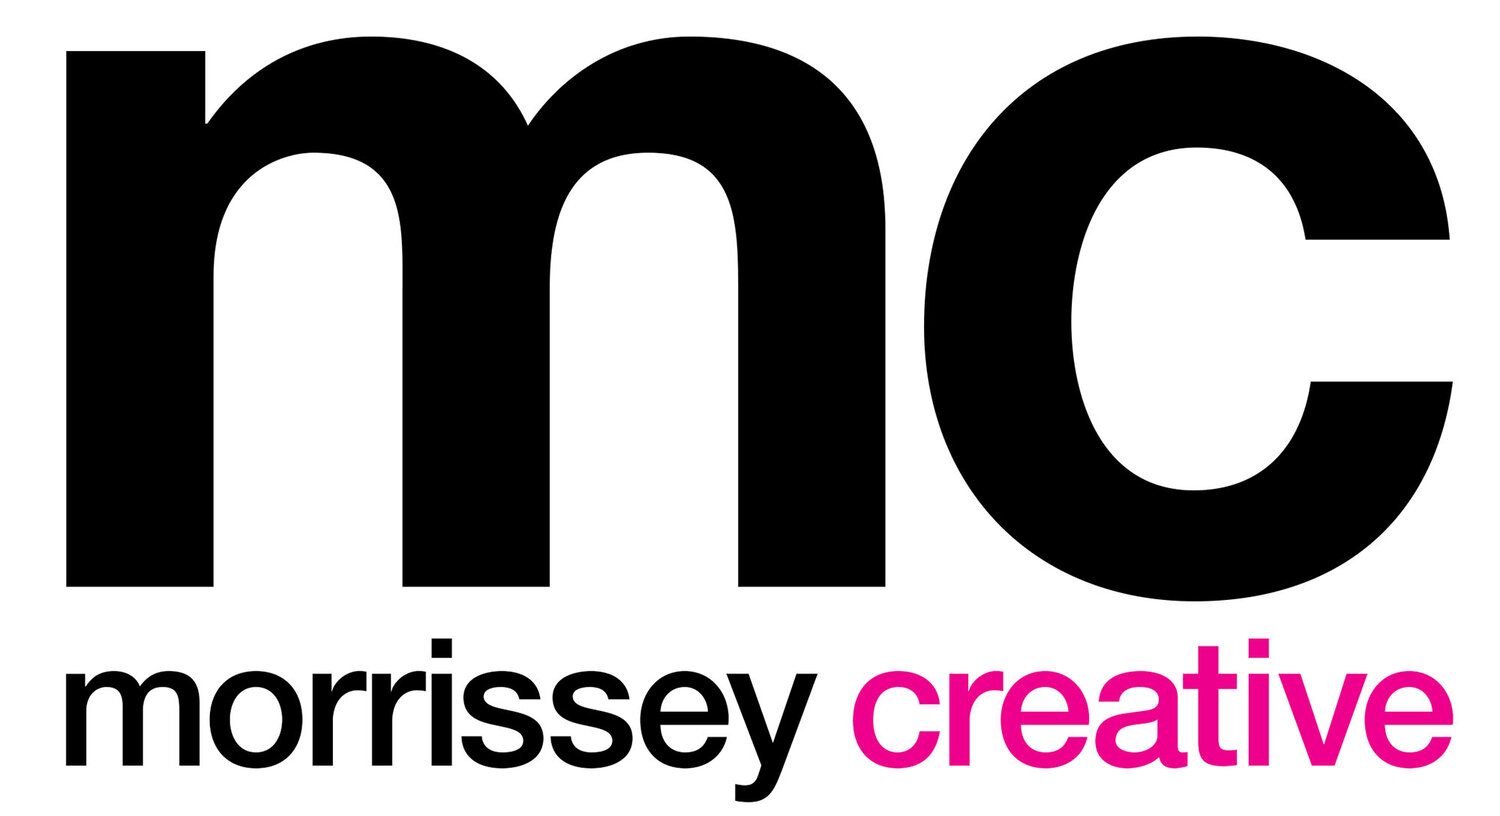 Tom Morrissey Creative